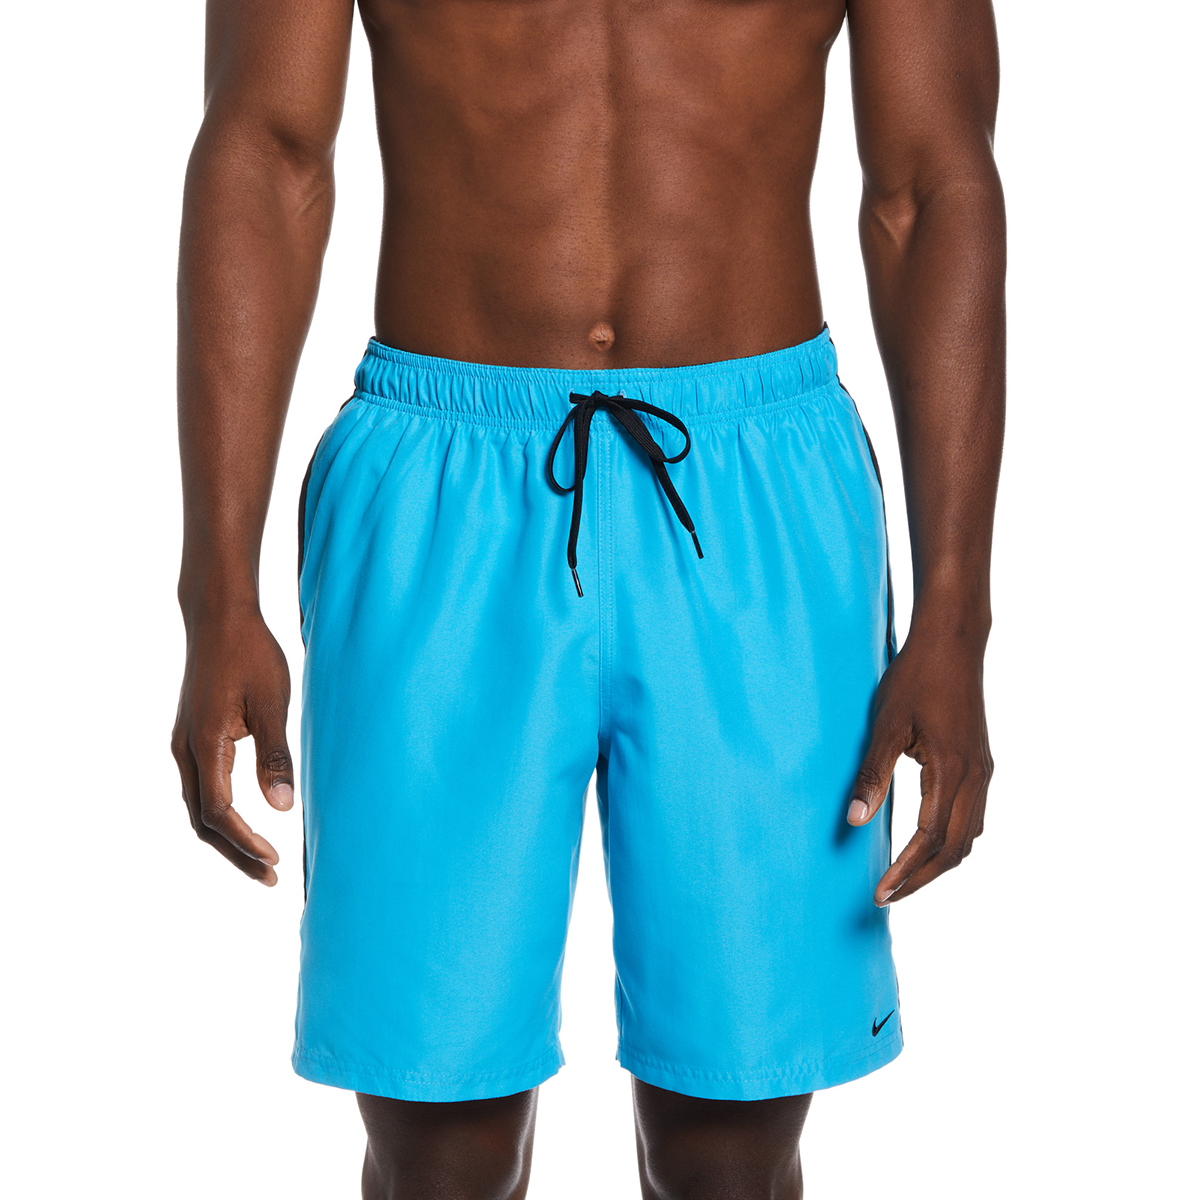 Nike Men's Diverge 9" Swim Trunks